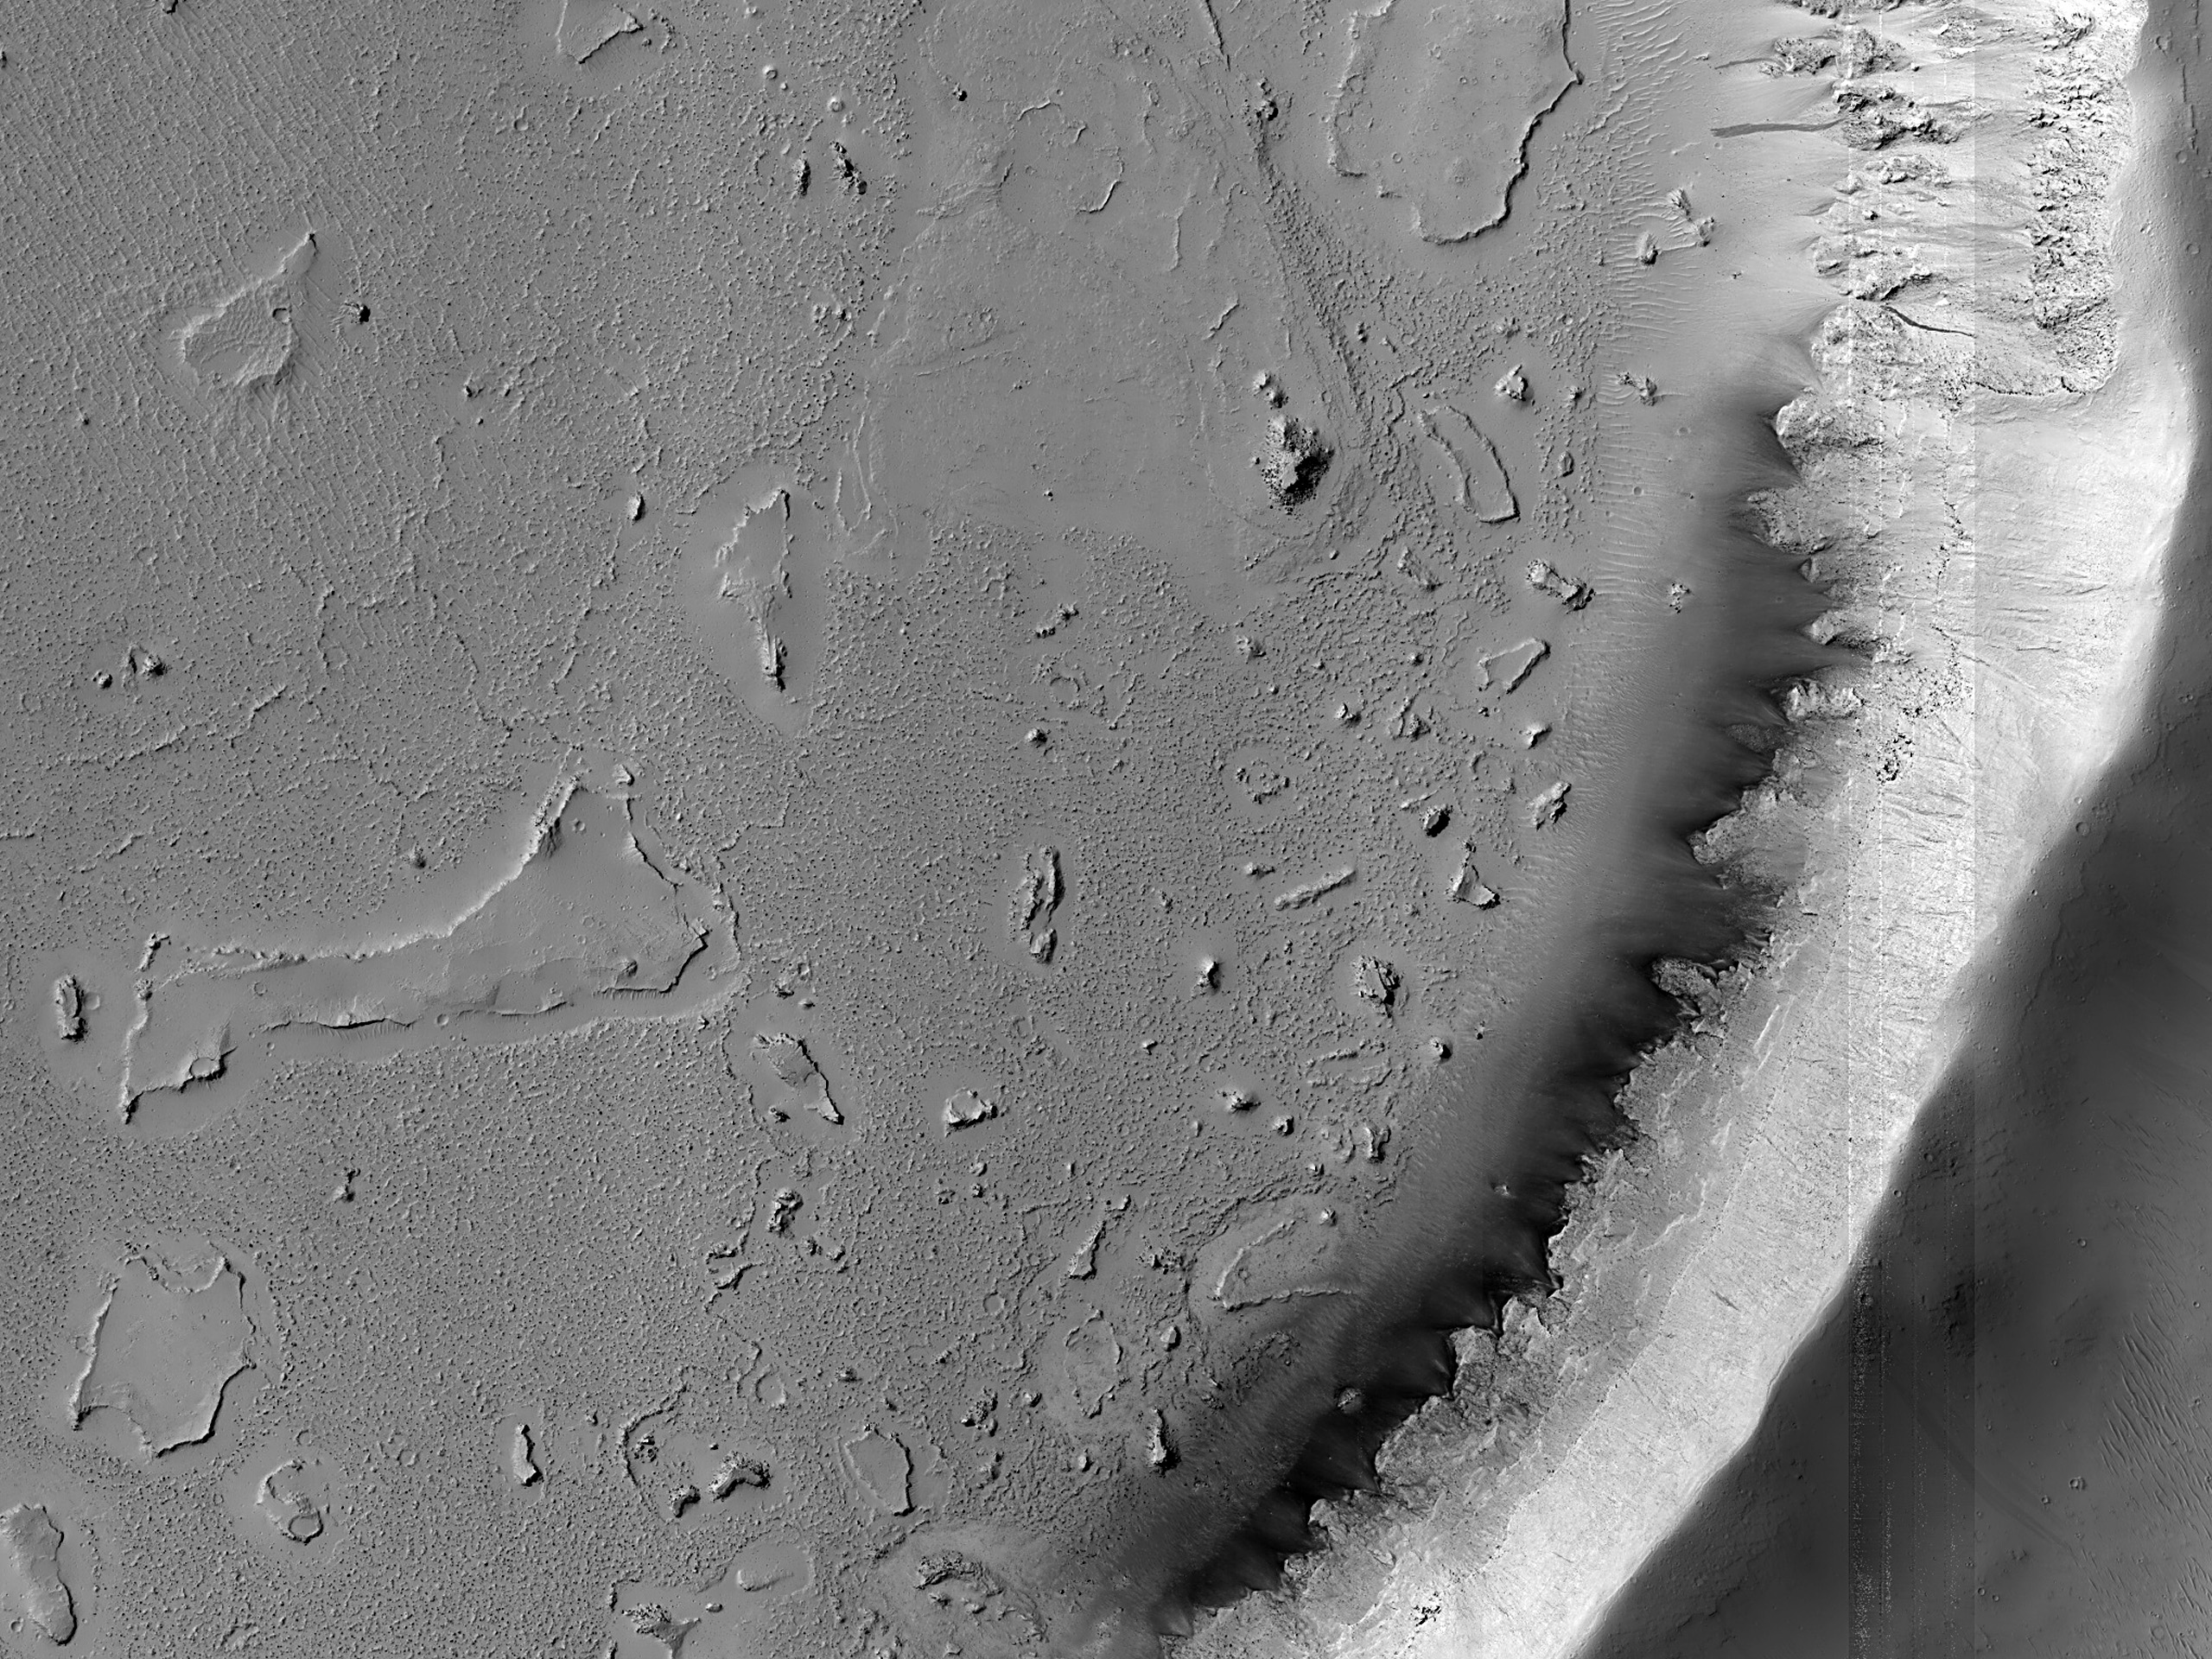 Crater and Lava Fill in Elysium Planitia